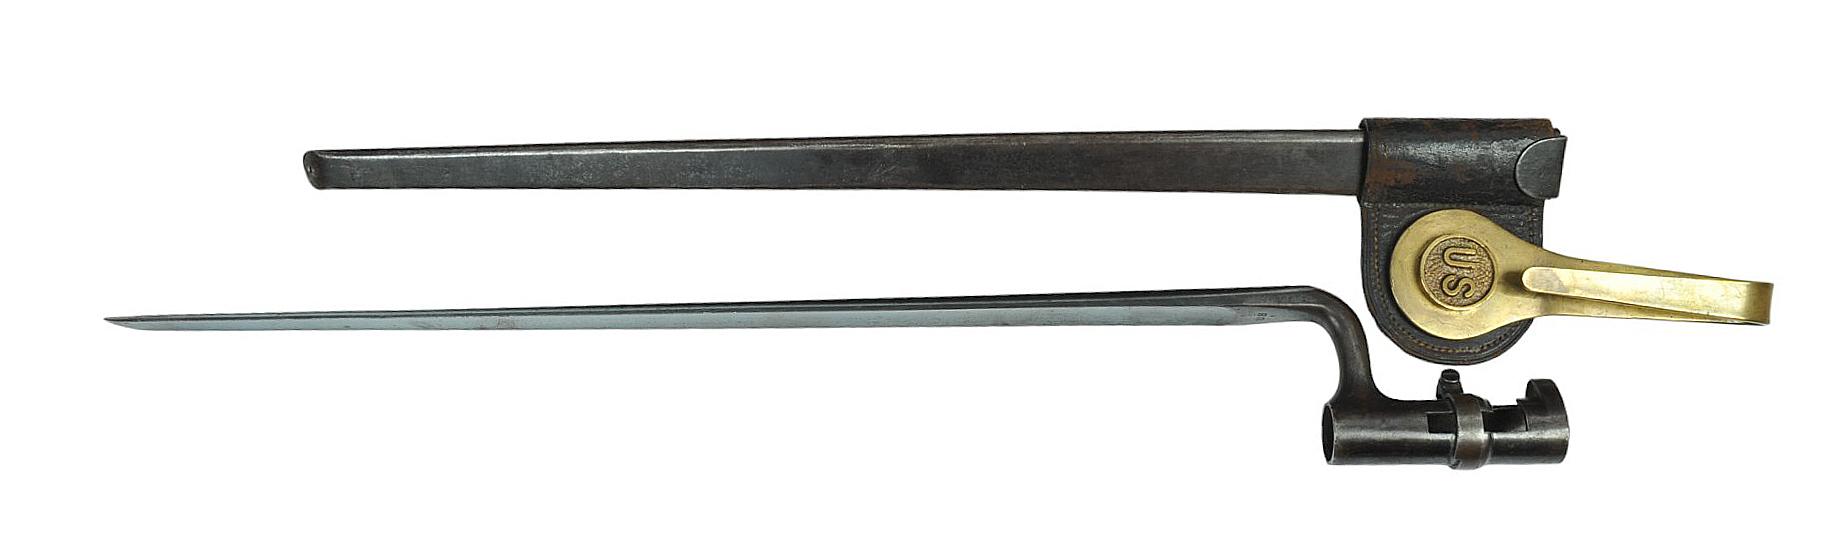 US Military Indian Wars era M1873 45/70 Trapdoor Socket Bayonet (VDM)